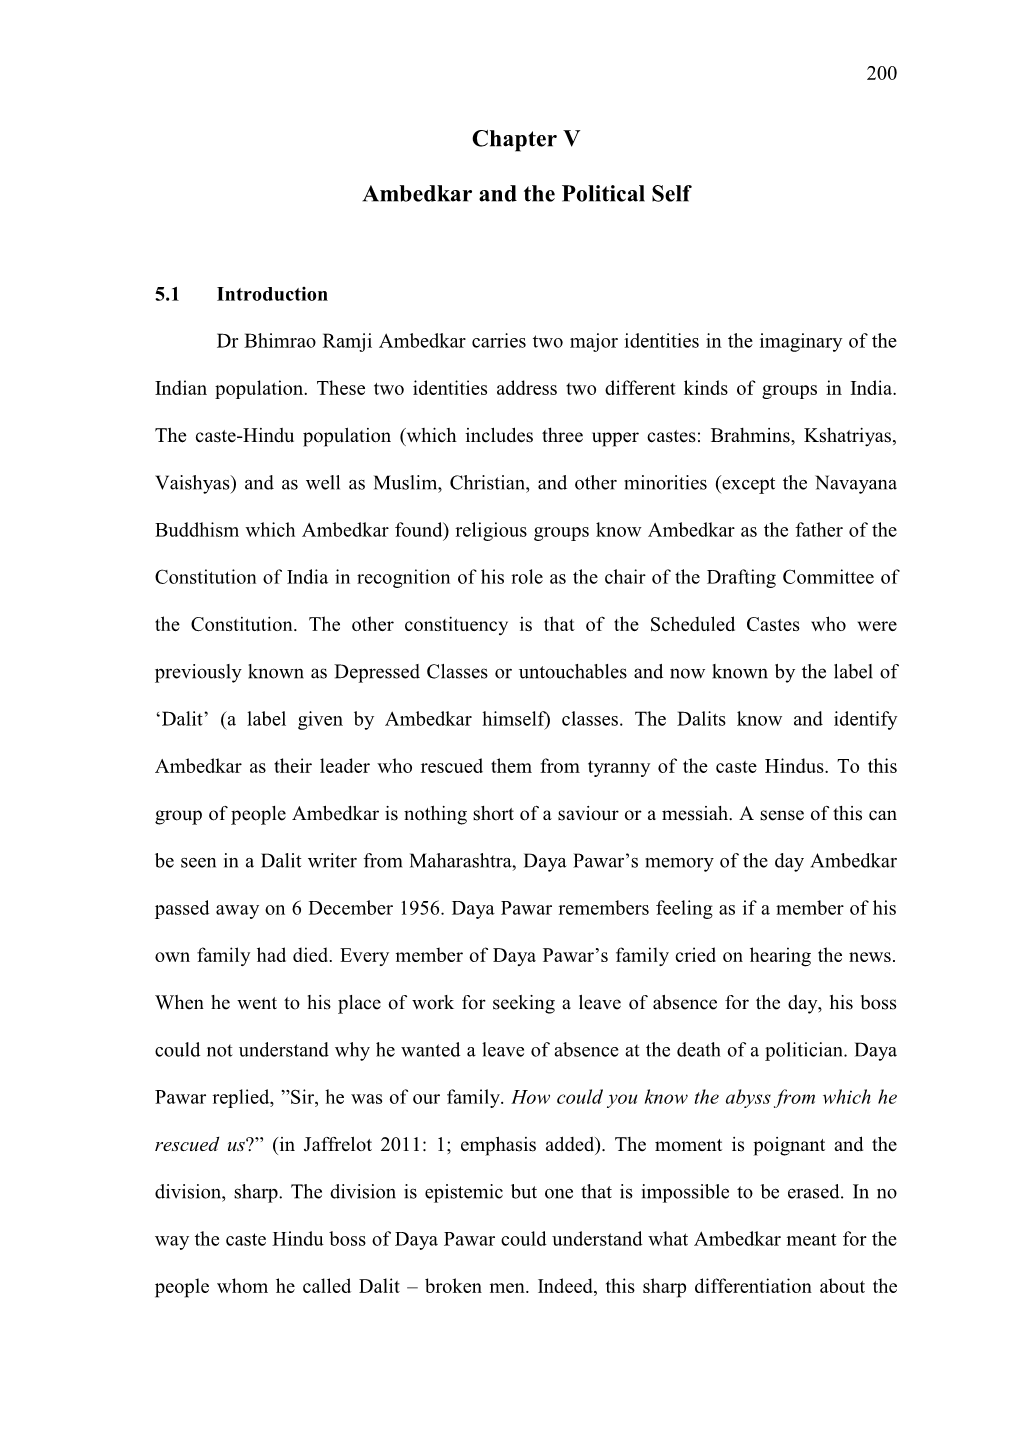 Chapter V Ambedkar and the Political Self